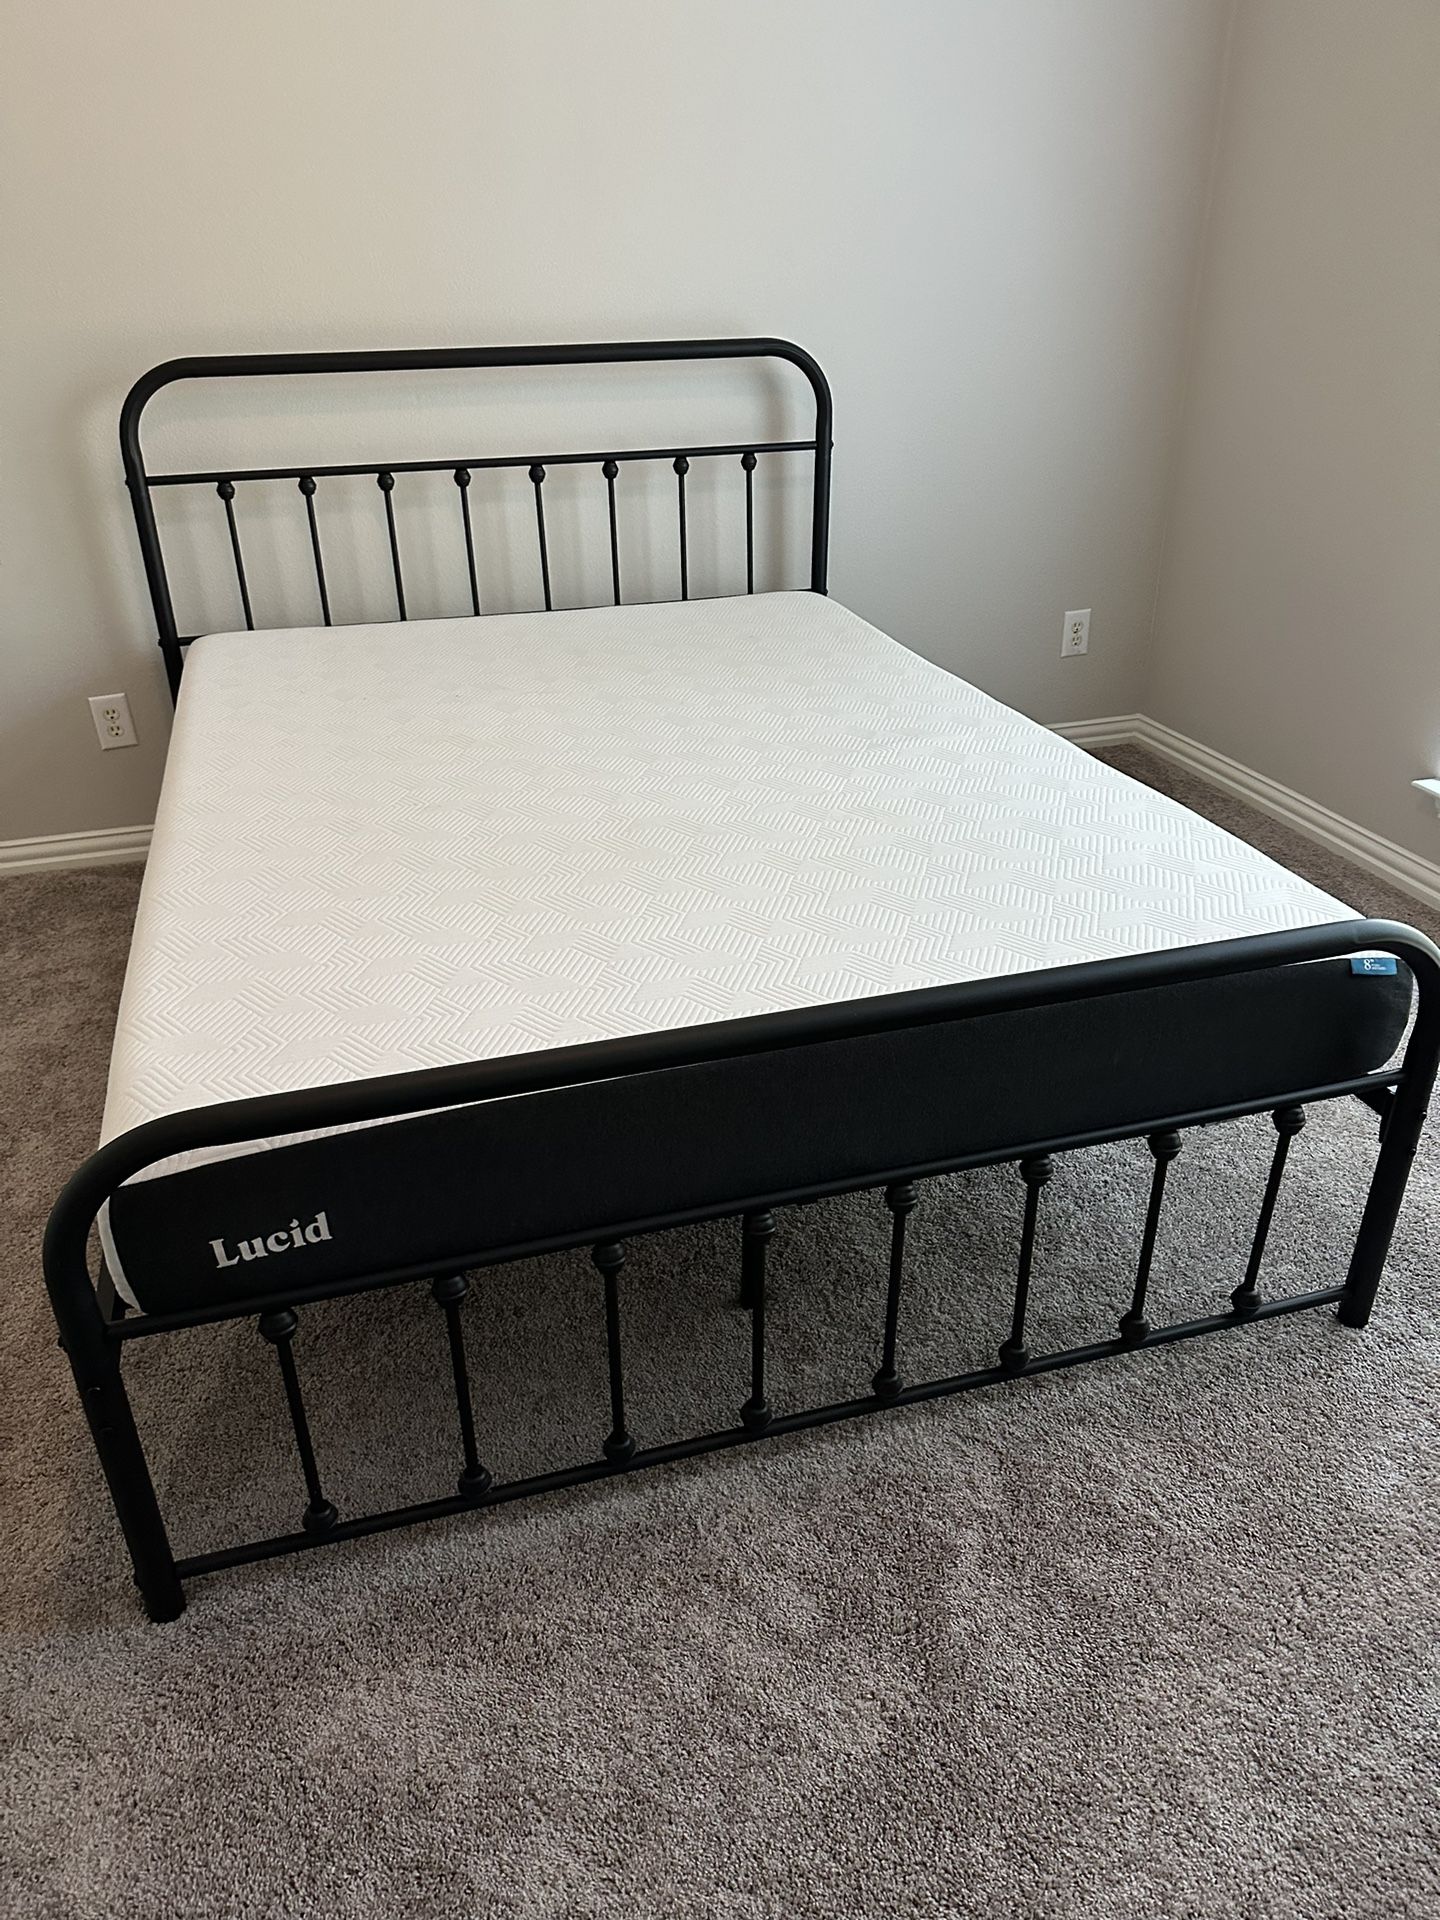 Queen Lucid 8” Memory Foam Bed With Headboard/footboard